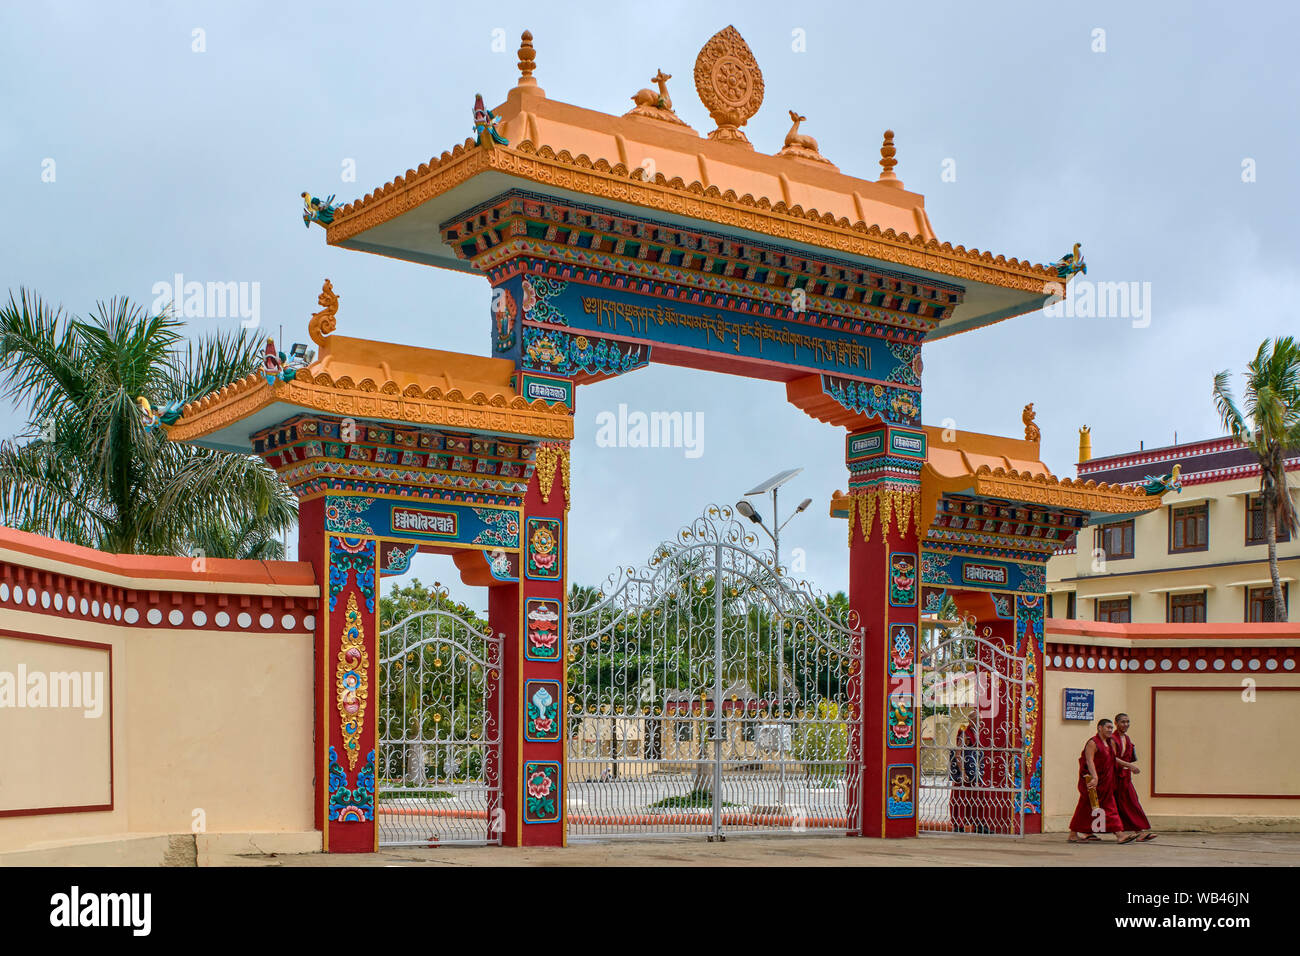 12-june-2013 Entrance of Shar Gaden Monastery at Mundgod panchayat town in Uttara Kannada district Karnataka India Asia Stock Photo